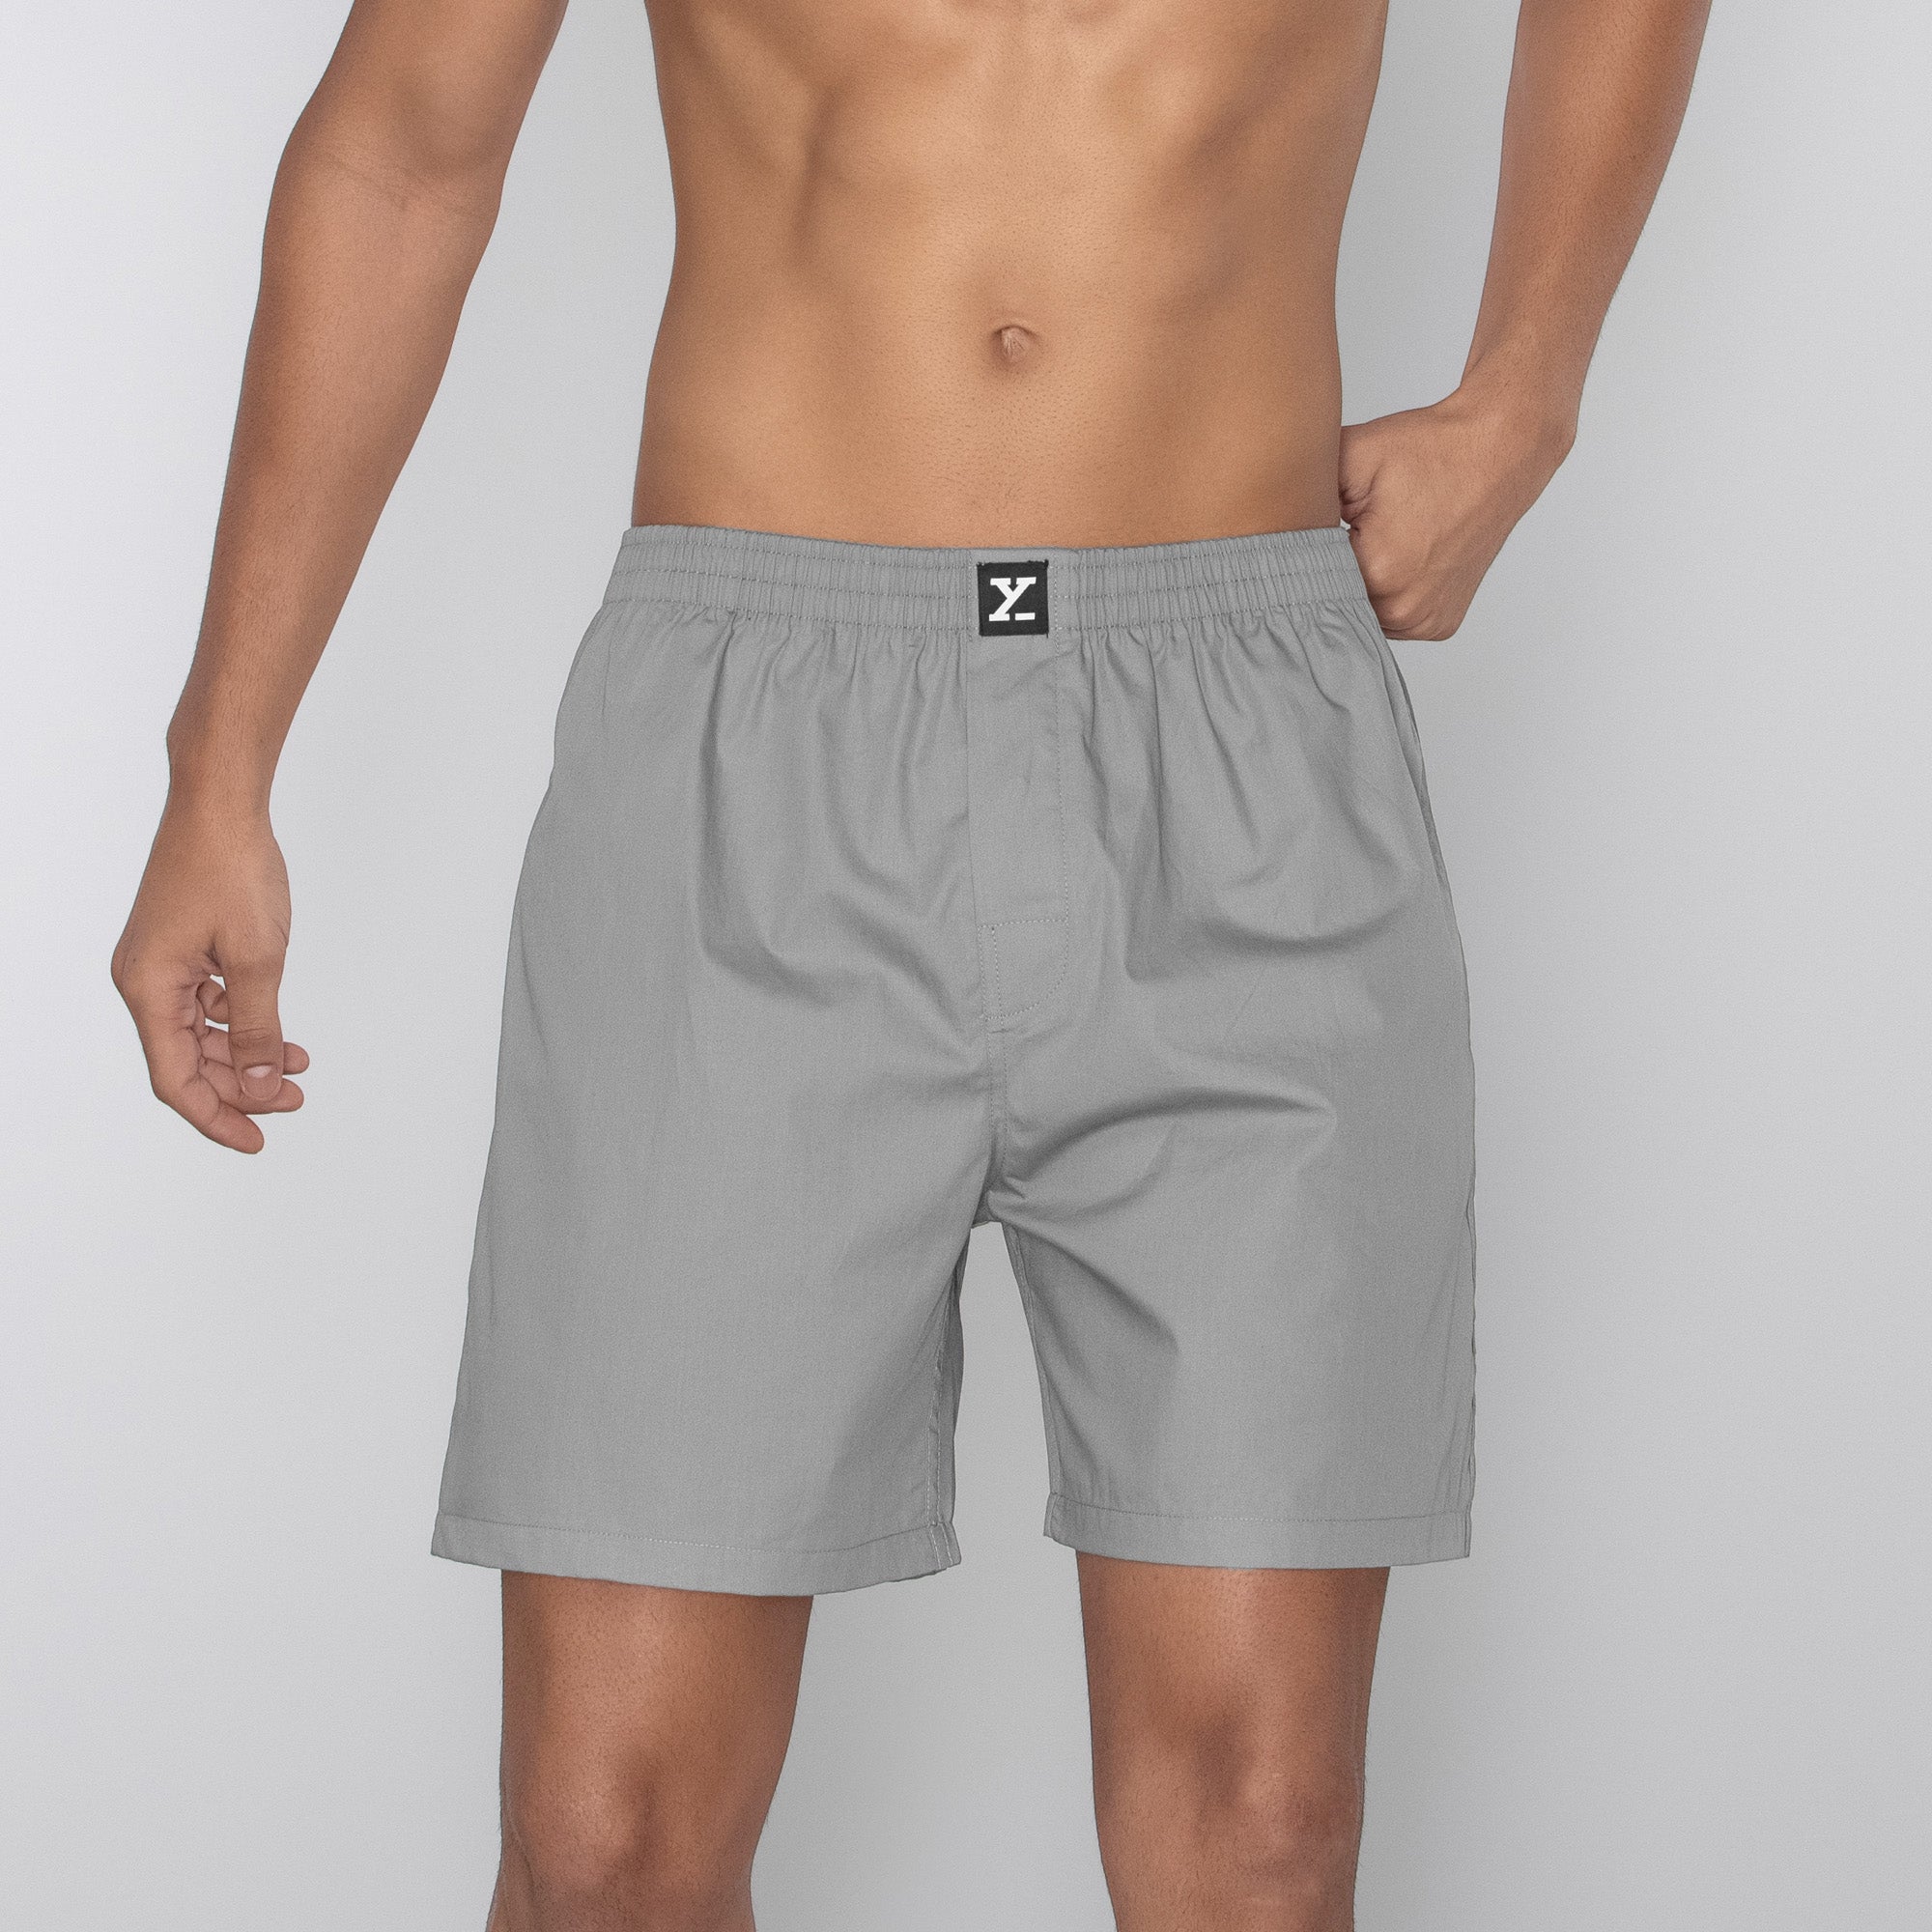 Pace Super Combed Cotton Boxer Shorts For Men Ash Grey - XYXX Mens Apparels